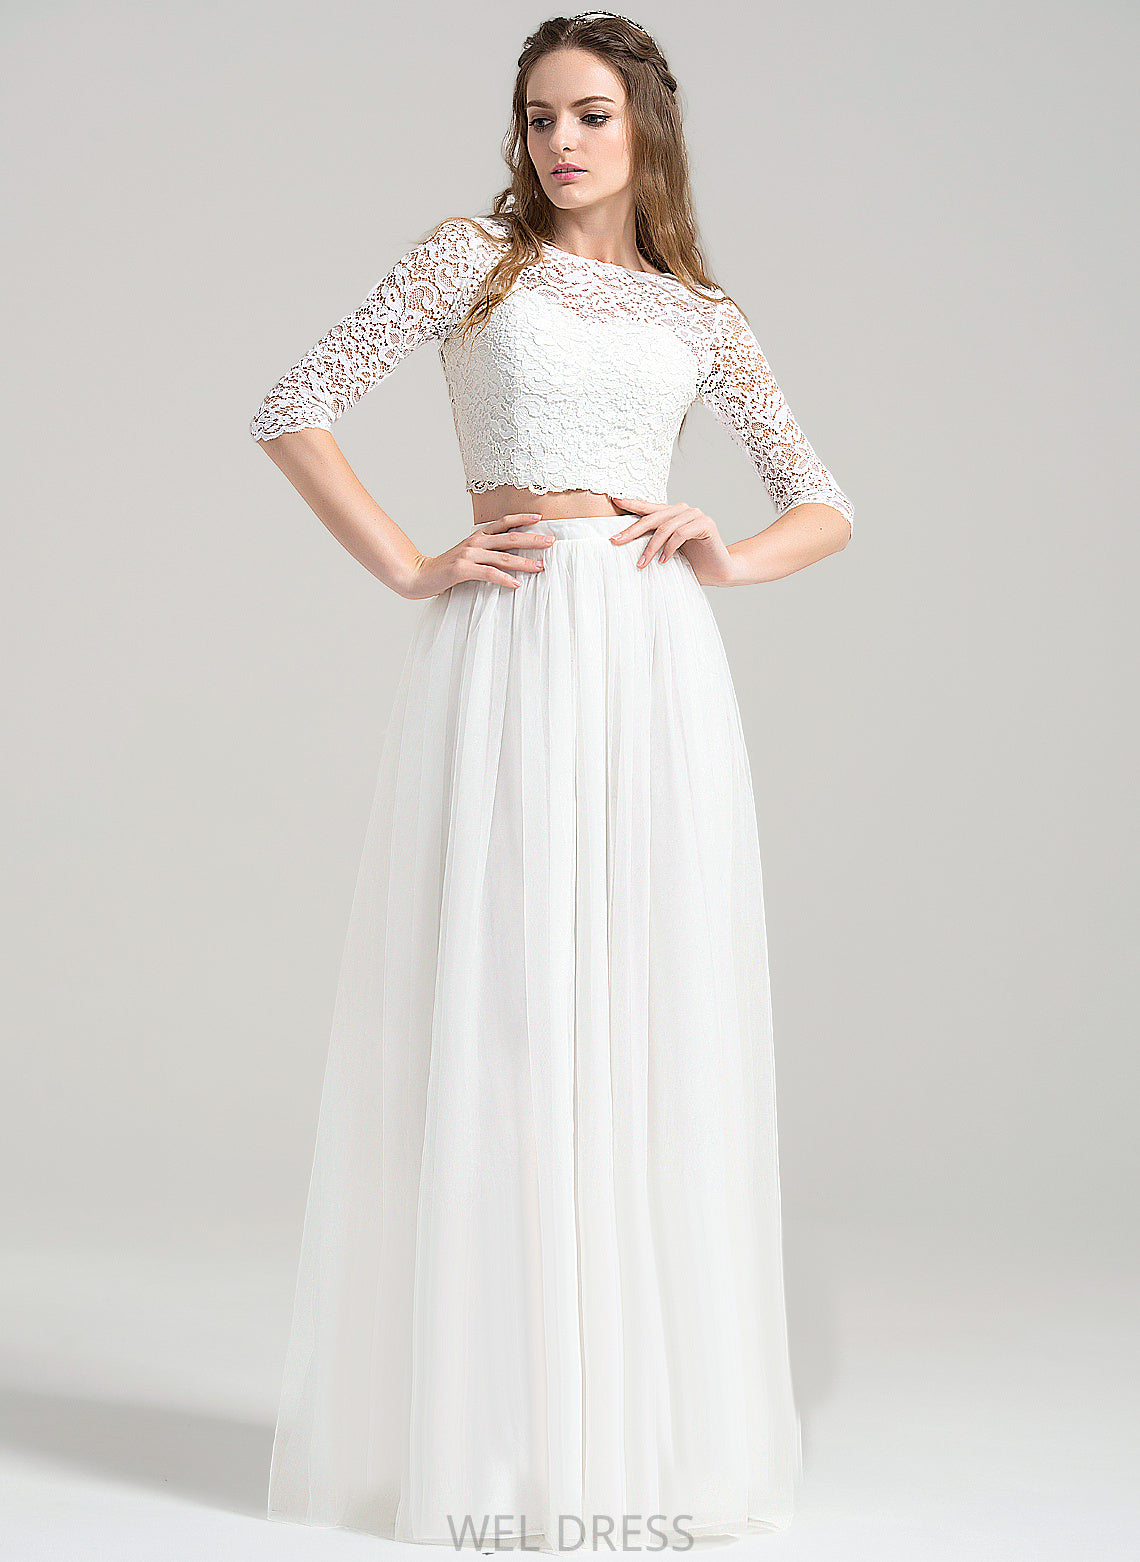 Dress Wedding Lace Taylor Tulle Floor-Length A-Line Wedding Dresses